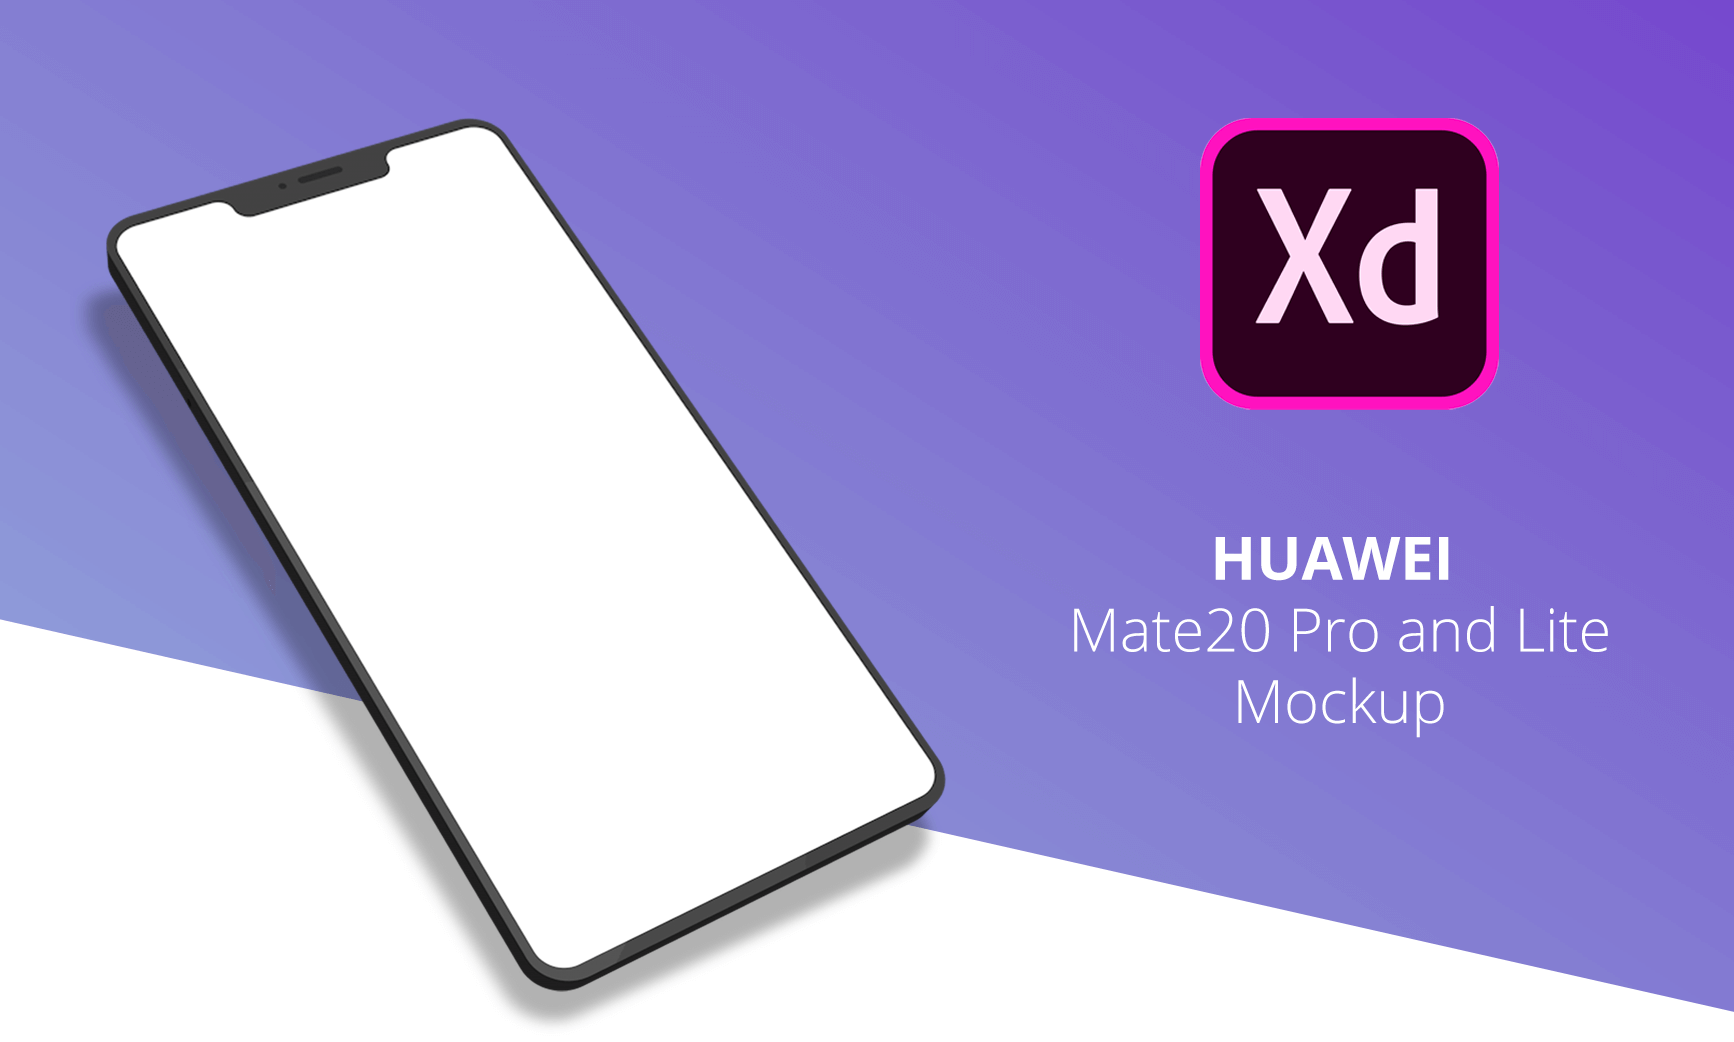 Download Huawei Mate 20 Minimal Mockup - Free XD Resource | Adobe XD Elements